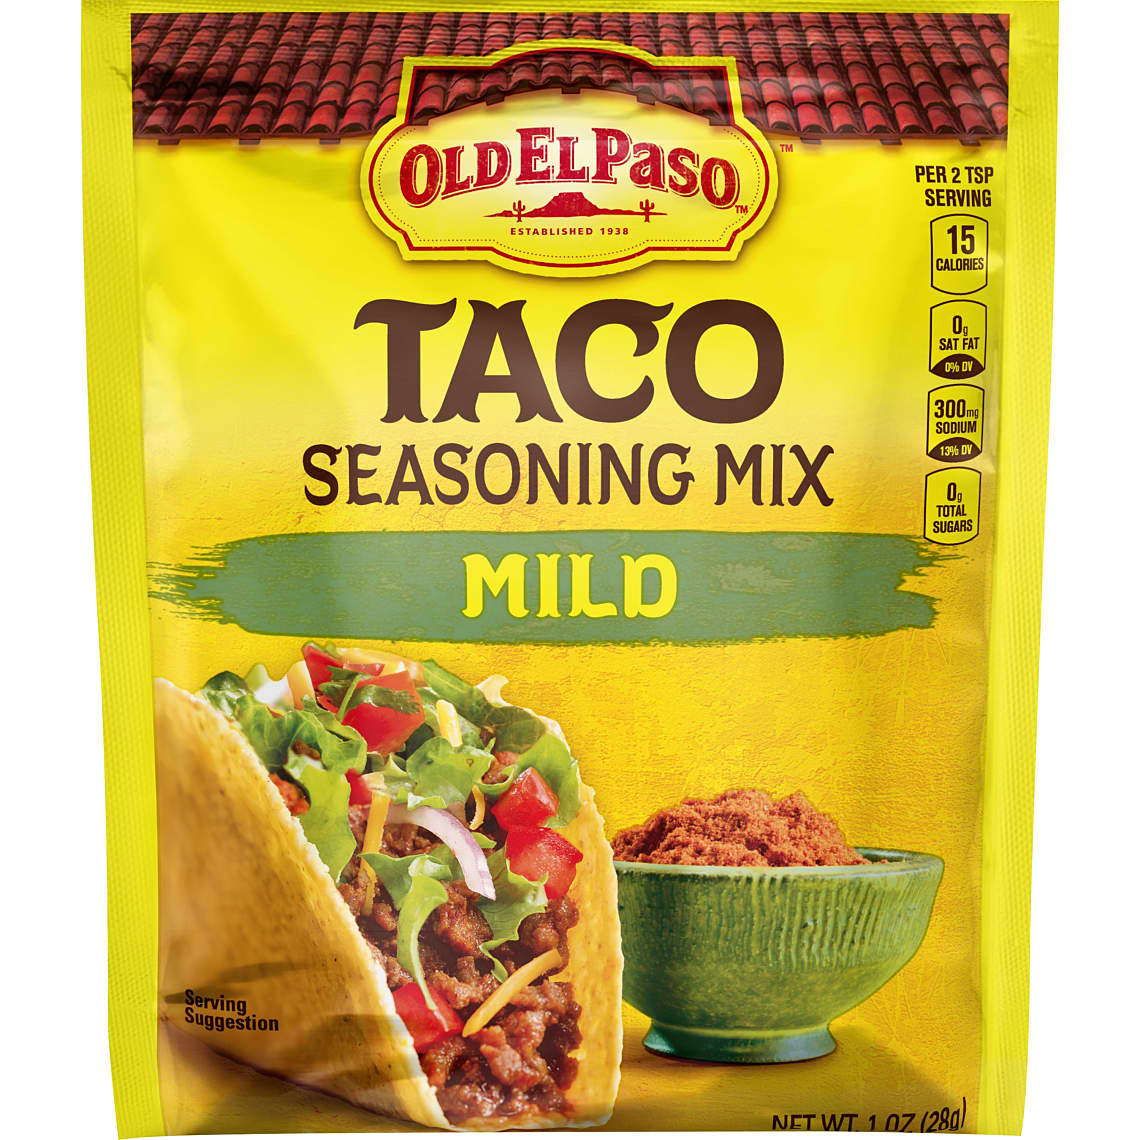 Old El Paso Taco Seasoning Mix Mild 1 oz Packet